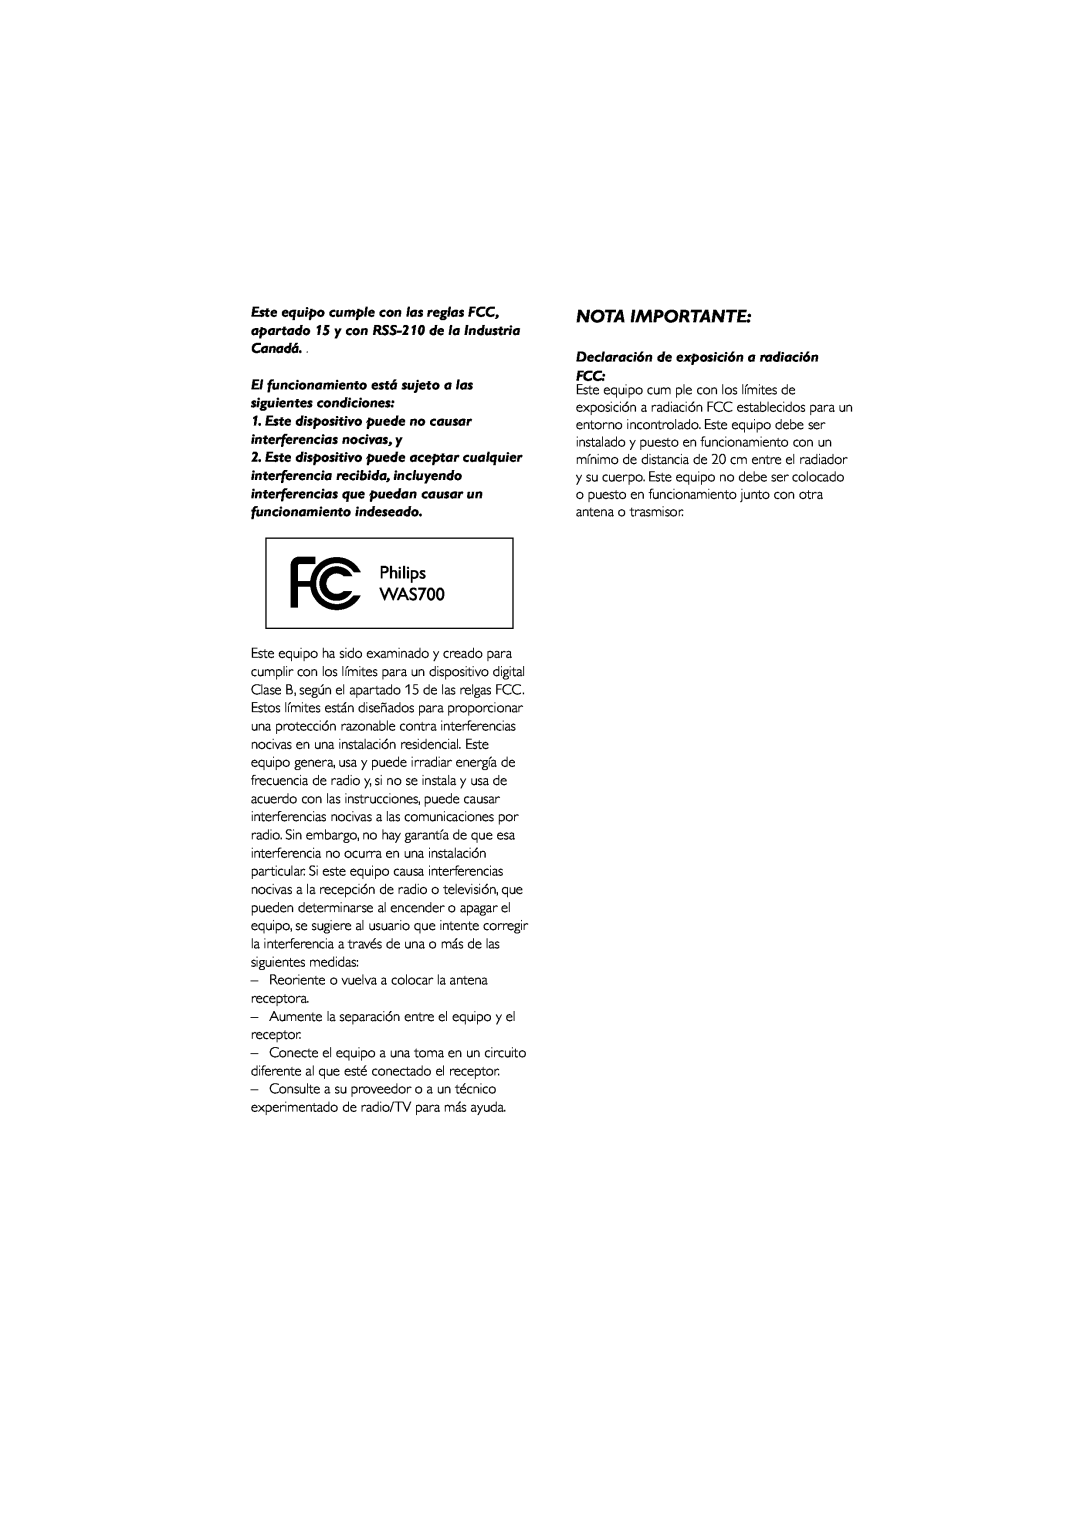 Philips WAS700 owner manual Nota Importante, Declaración de exposición a radiación FCC 